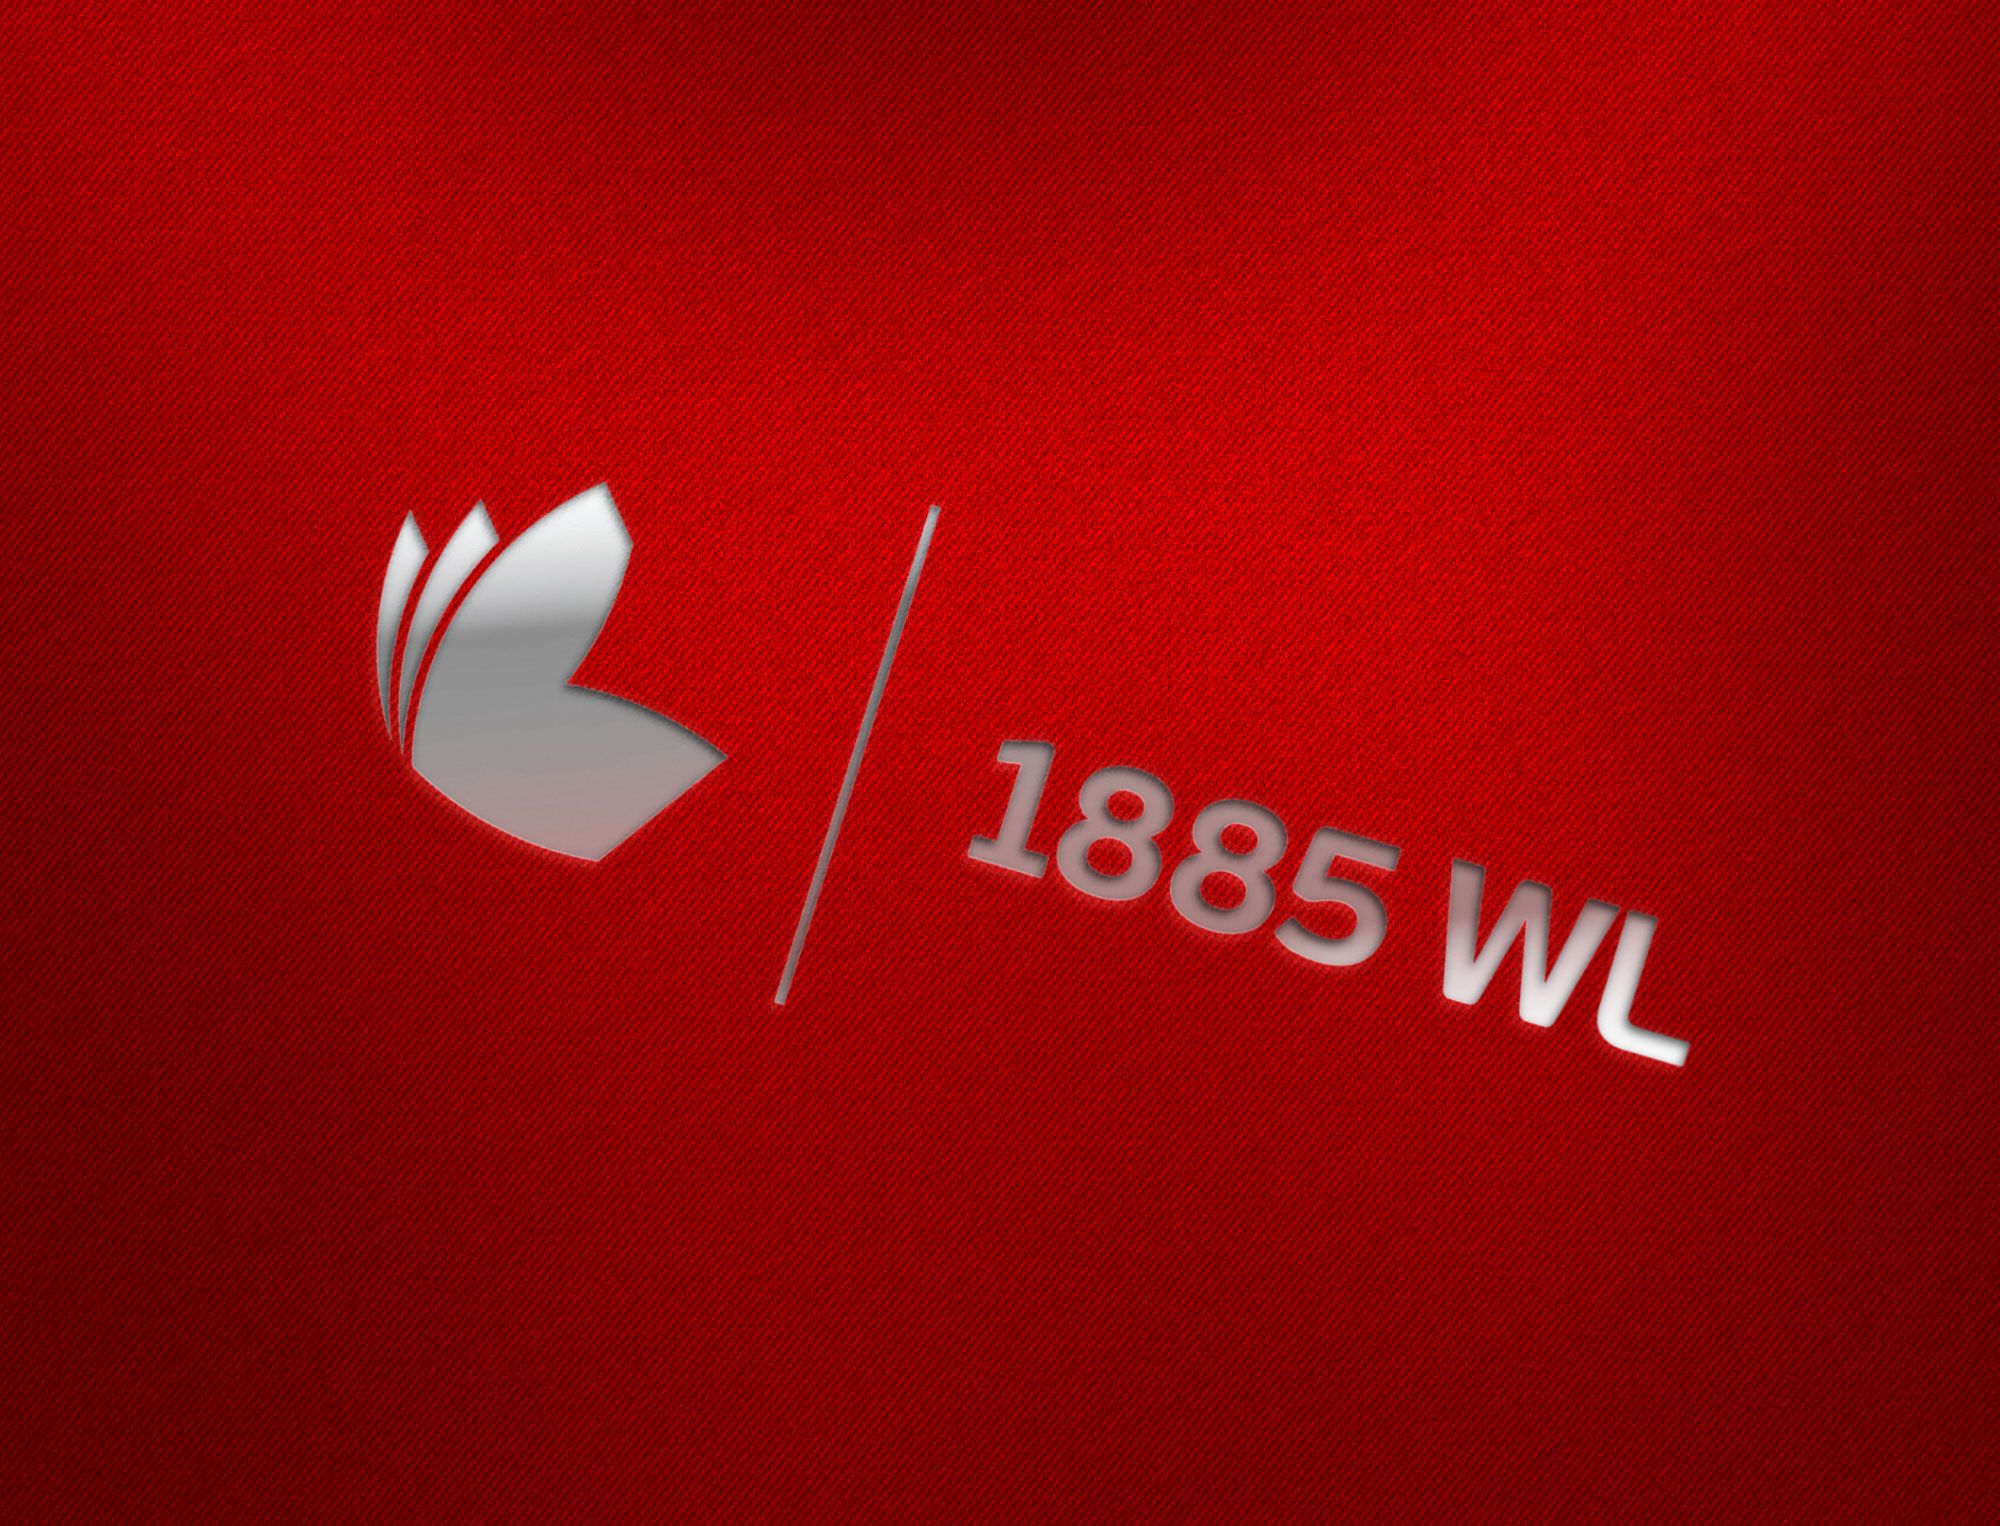 Логотип для 1885 WL - дизайнер Architect